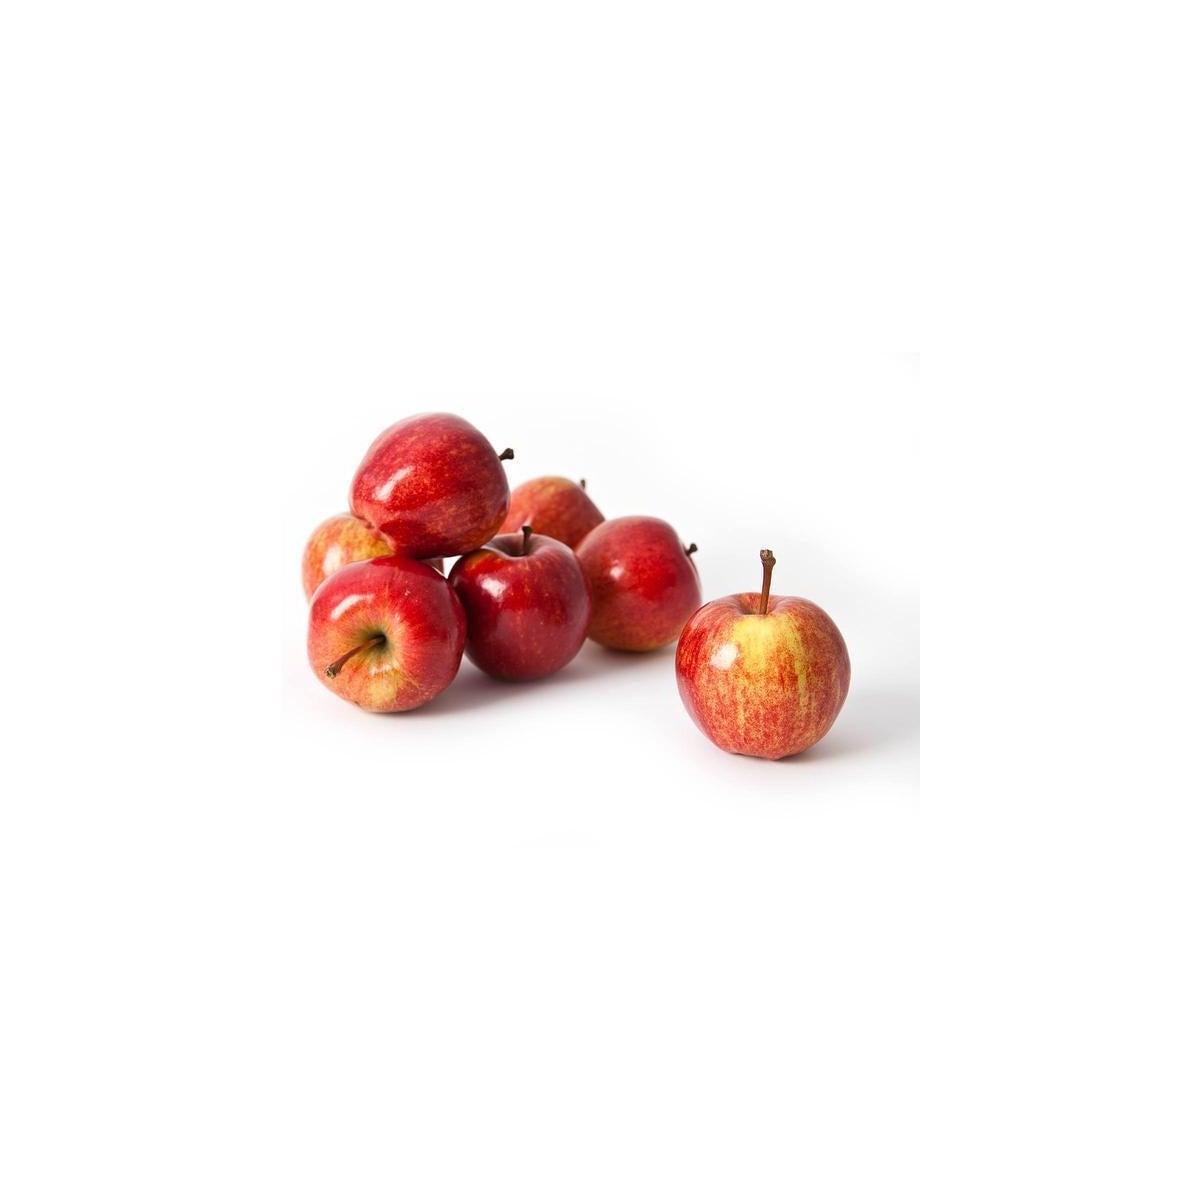 Gala Apples Fresh Produce Fruit